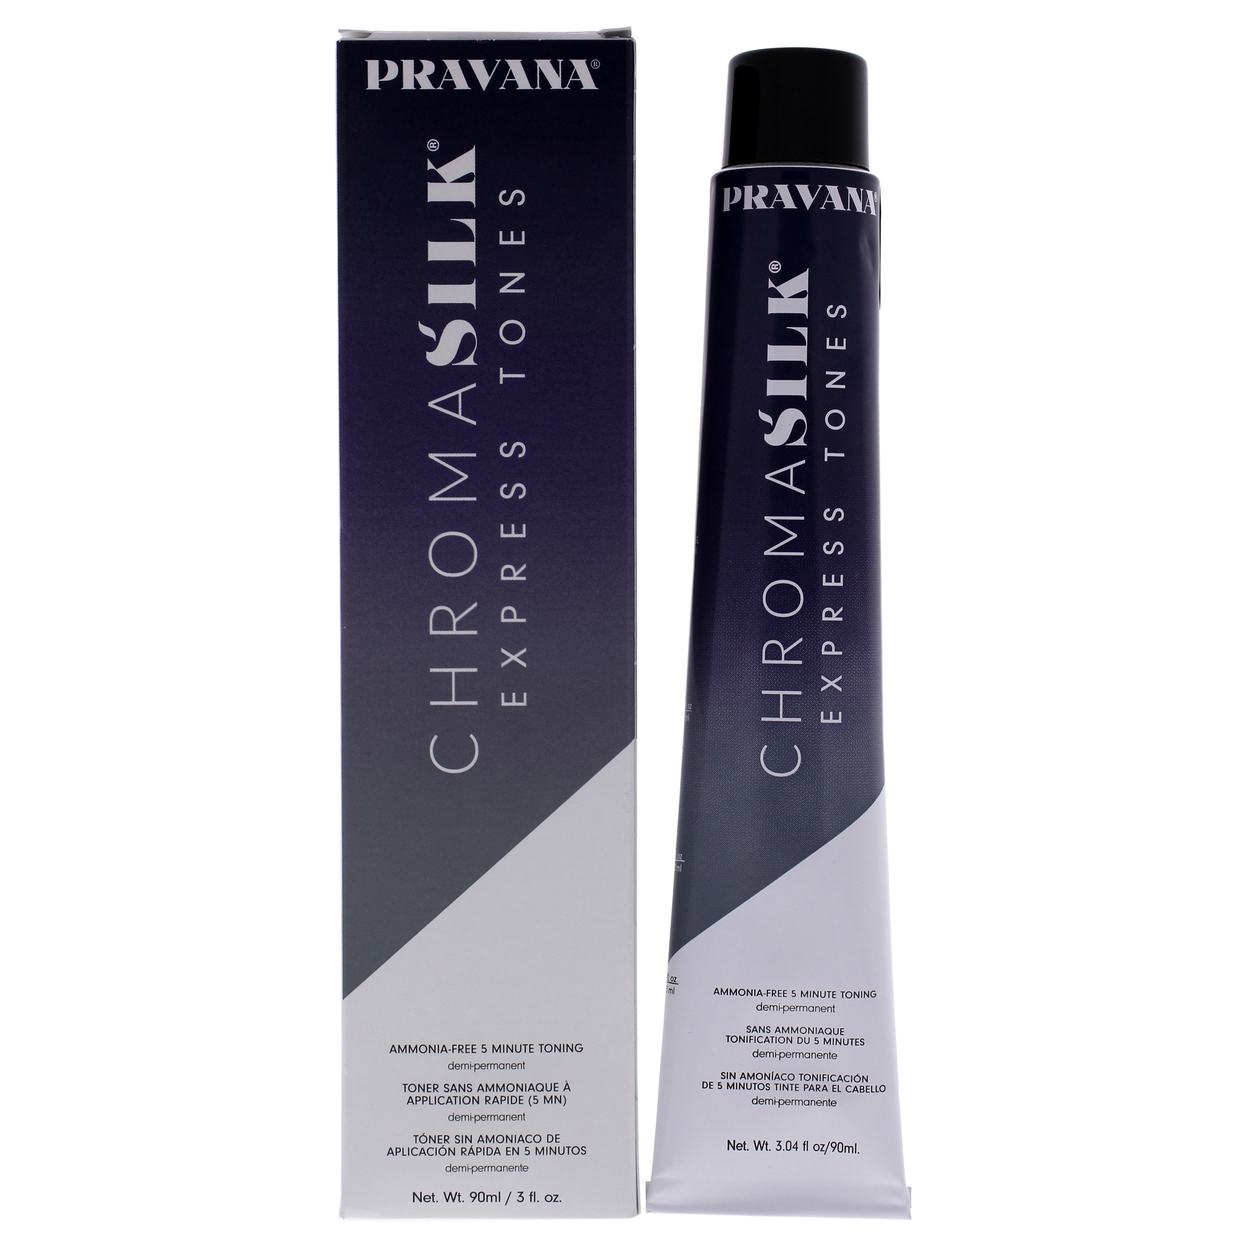 Pravana ChromaSilk Express Tones - Violet Hair Color 3 Oz